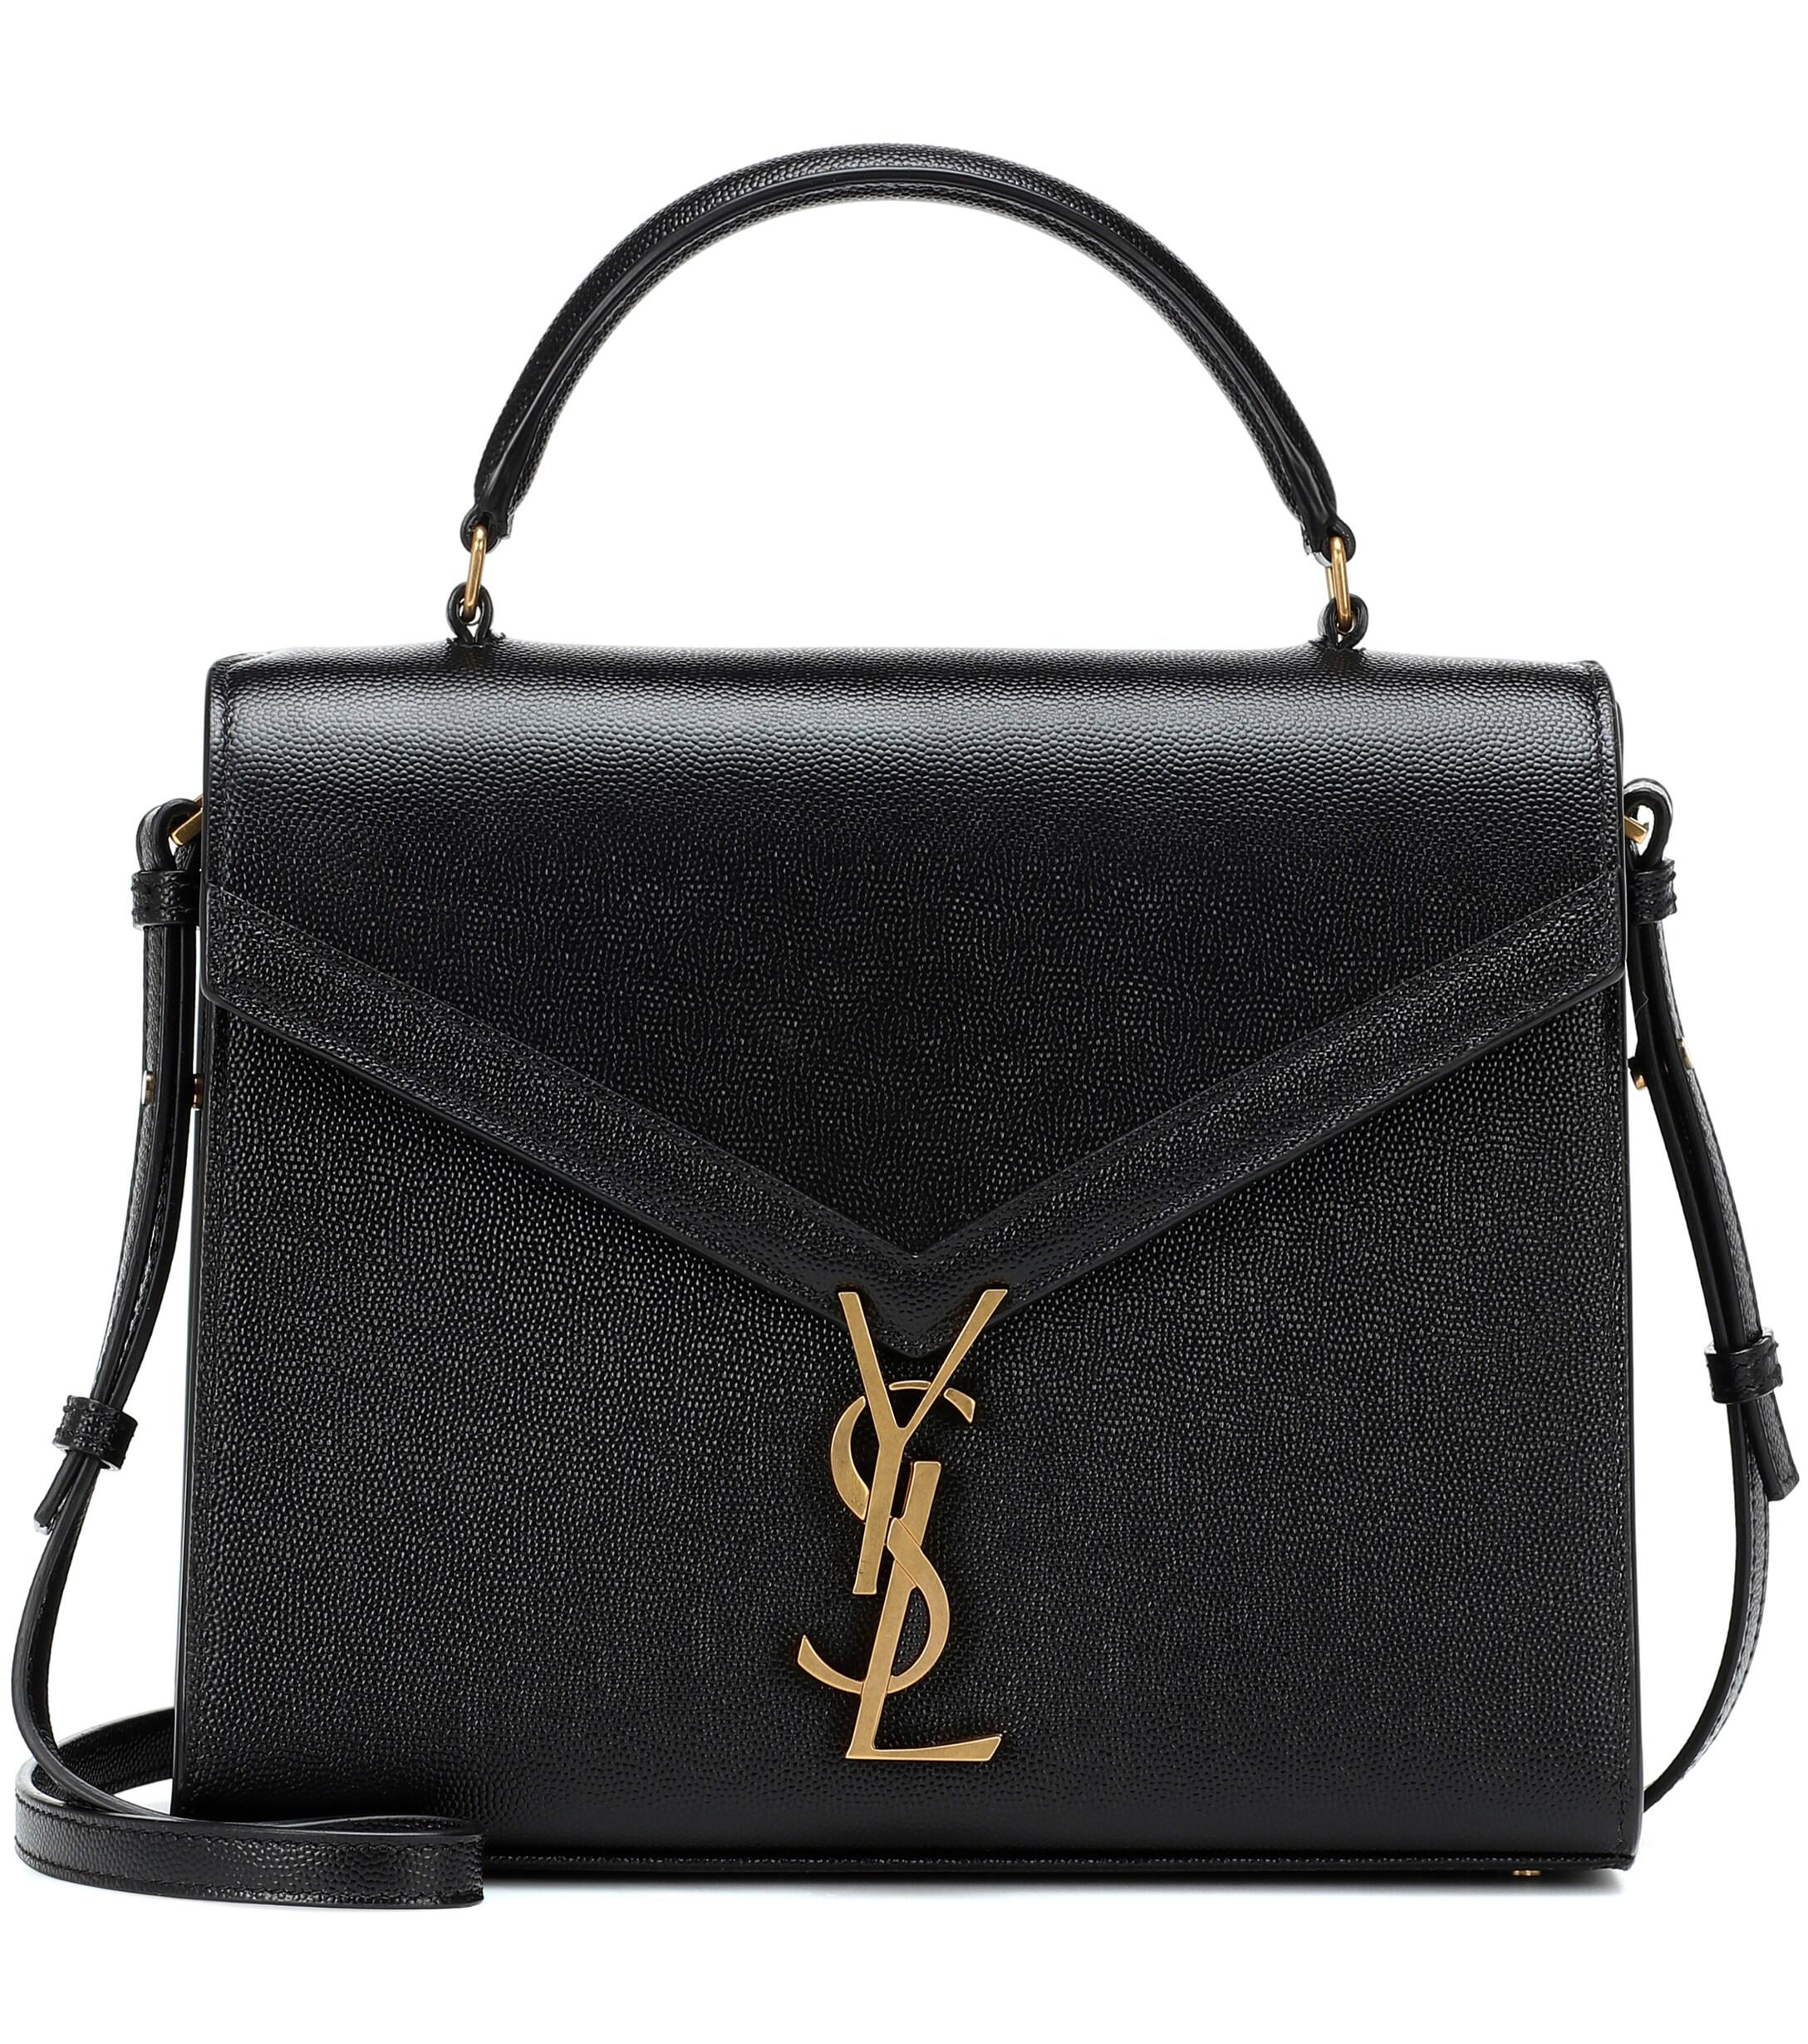 Saint Laurent Leather Cassandra Medium Shoulder Bag in Black - Lyst